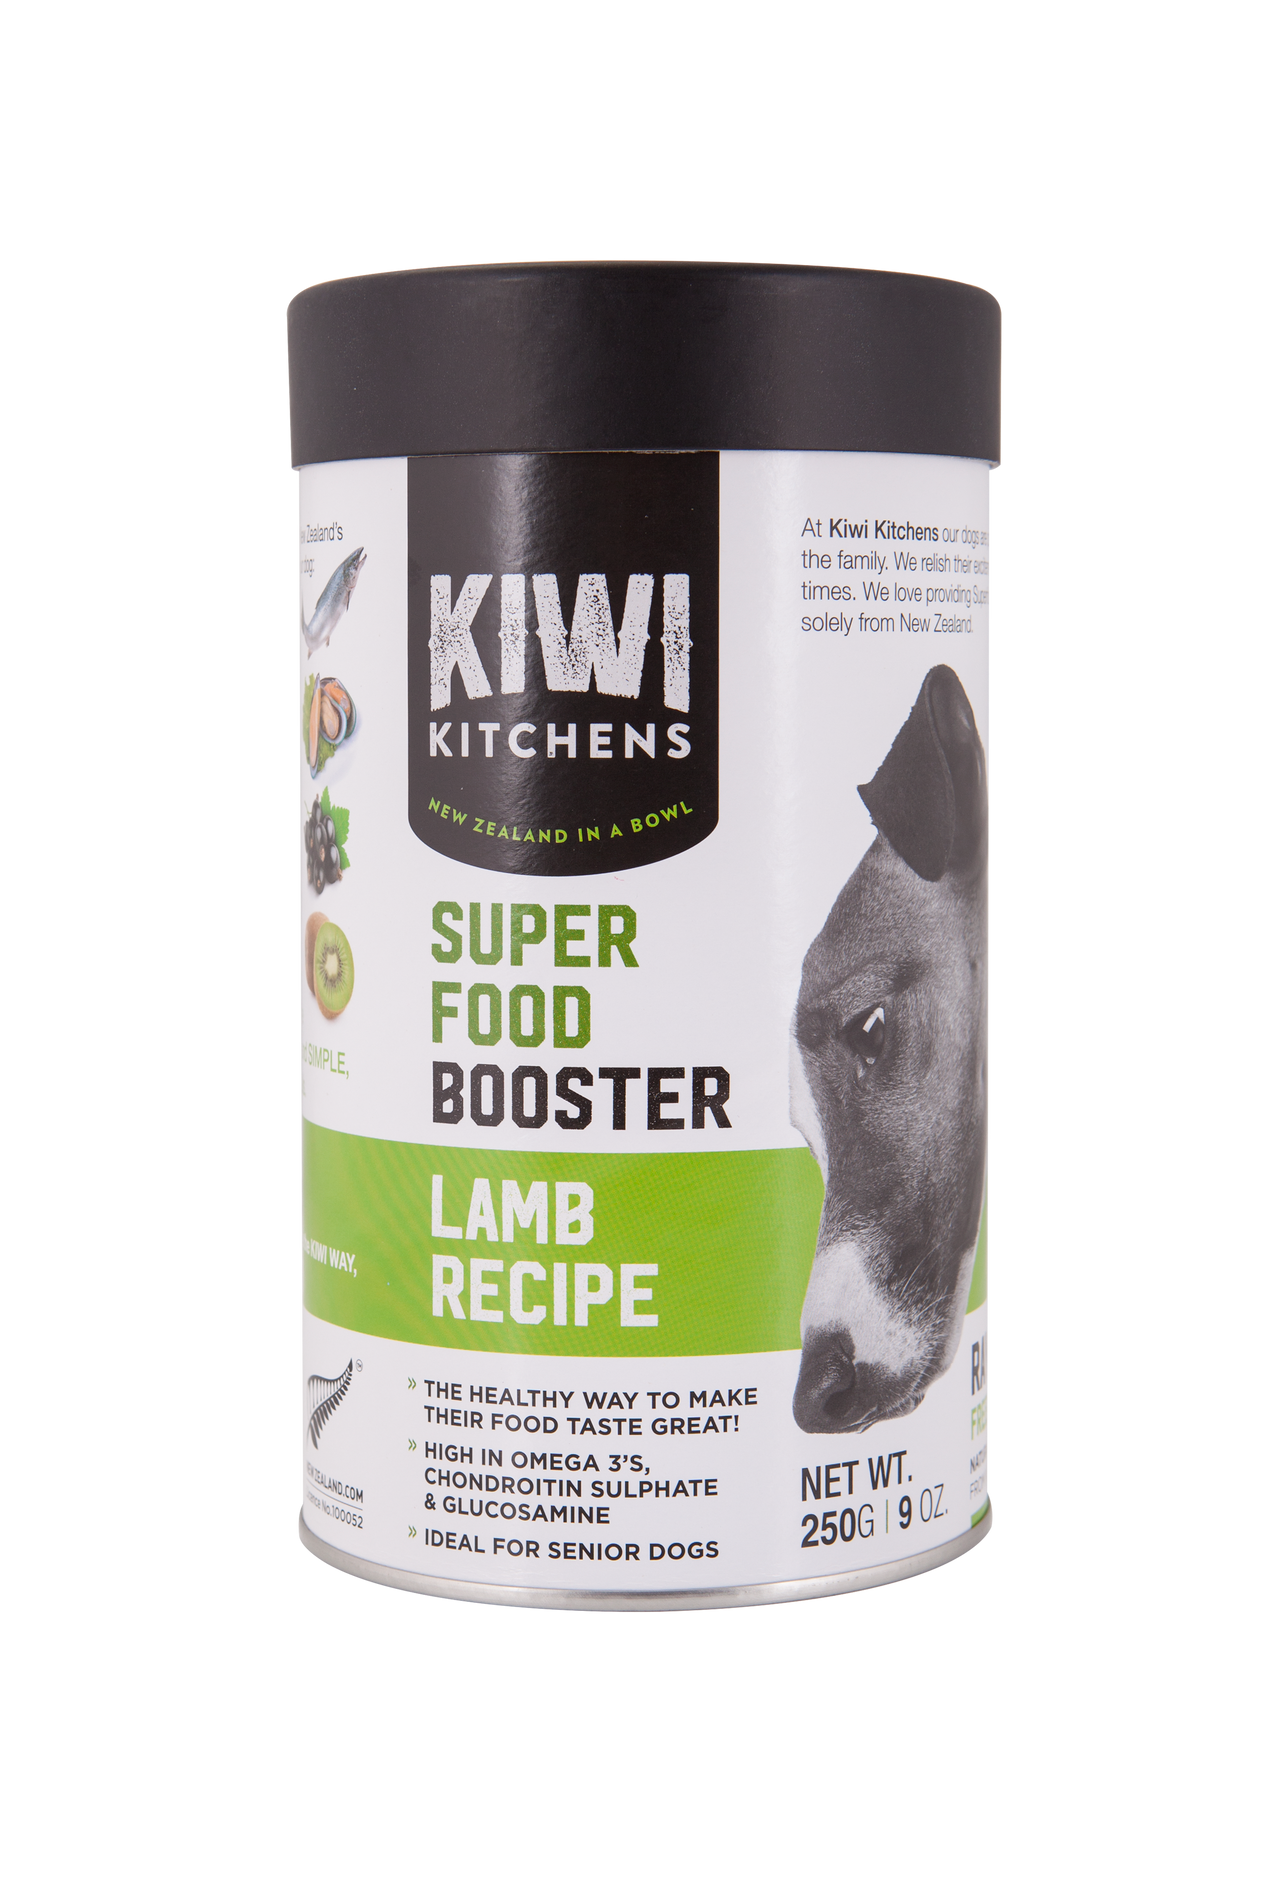 Brand: Kiwi Kitchens